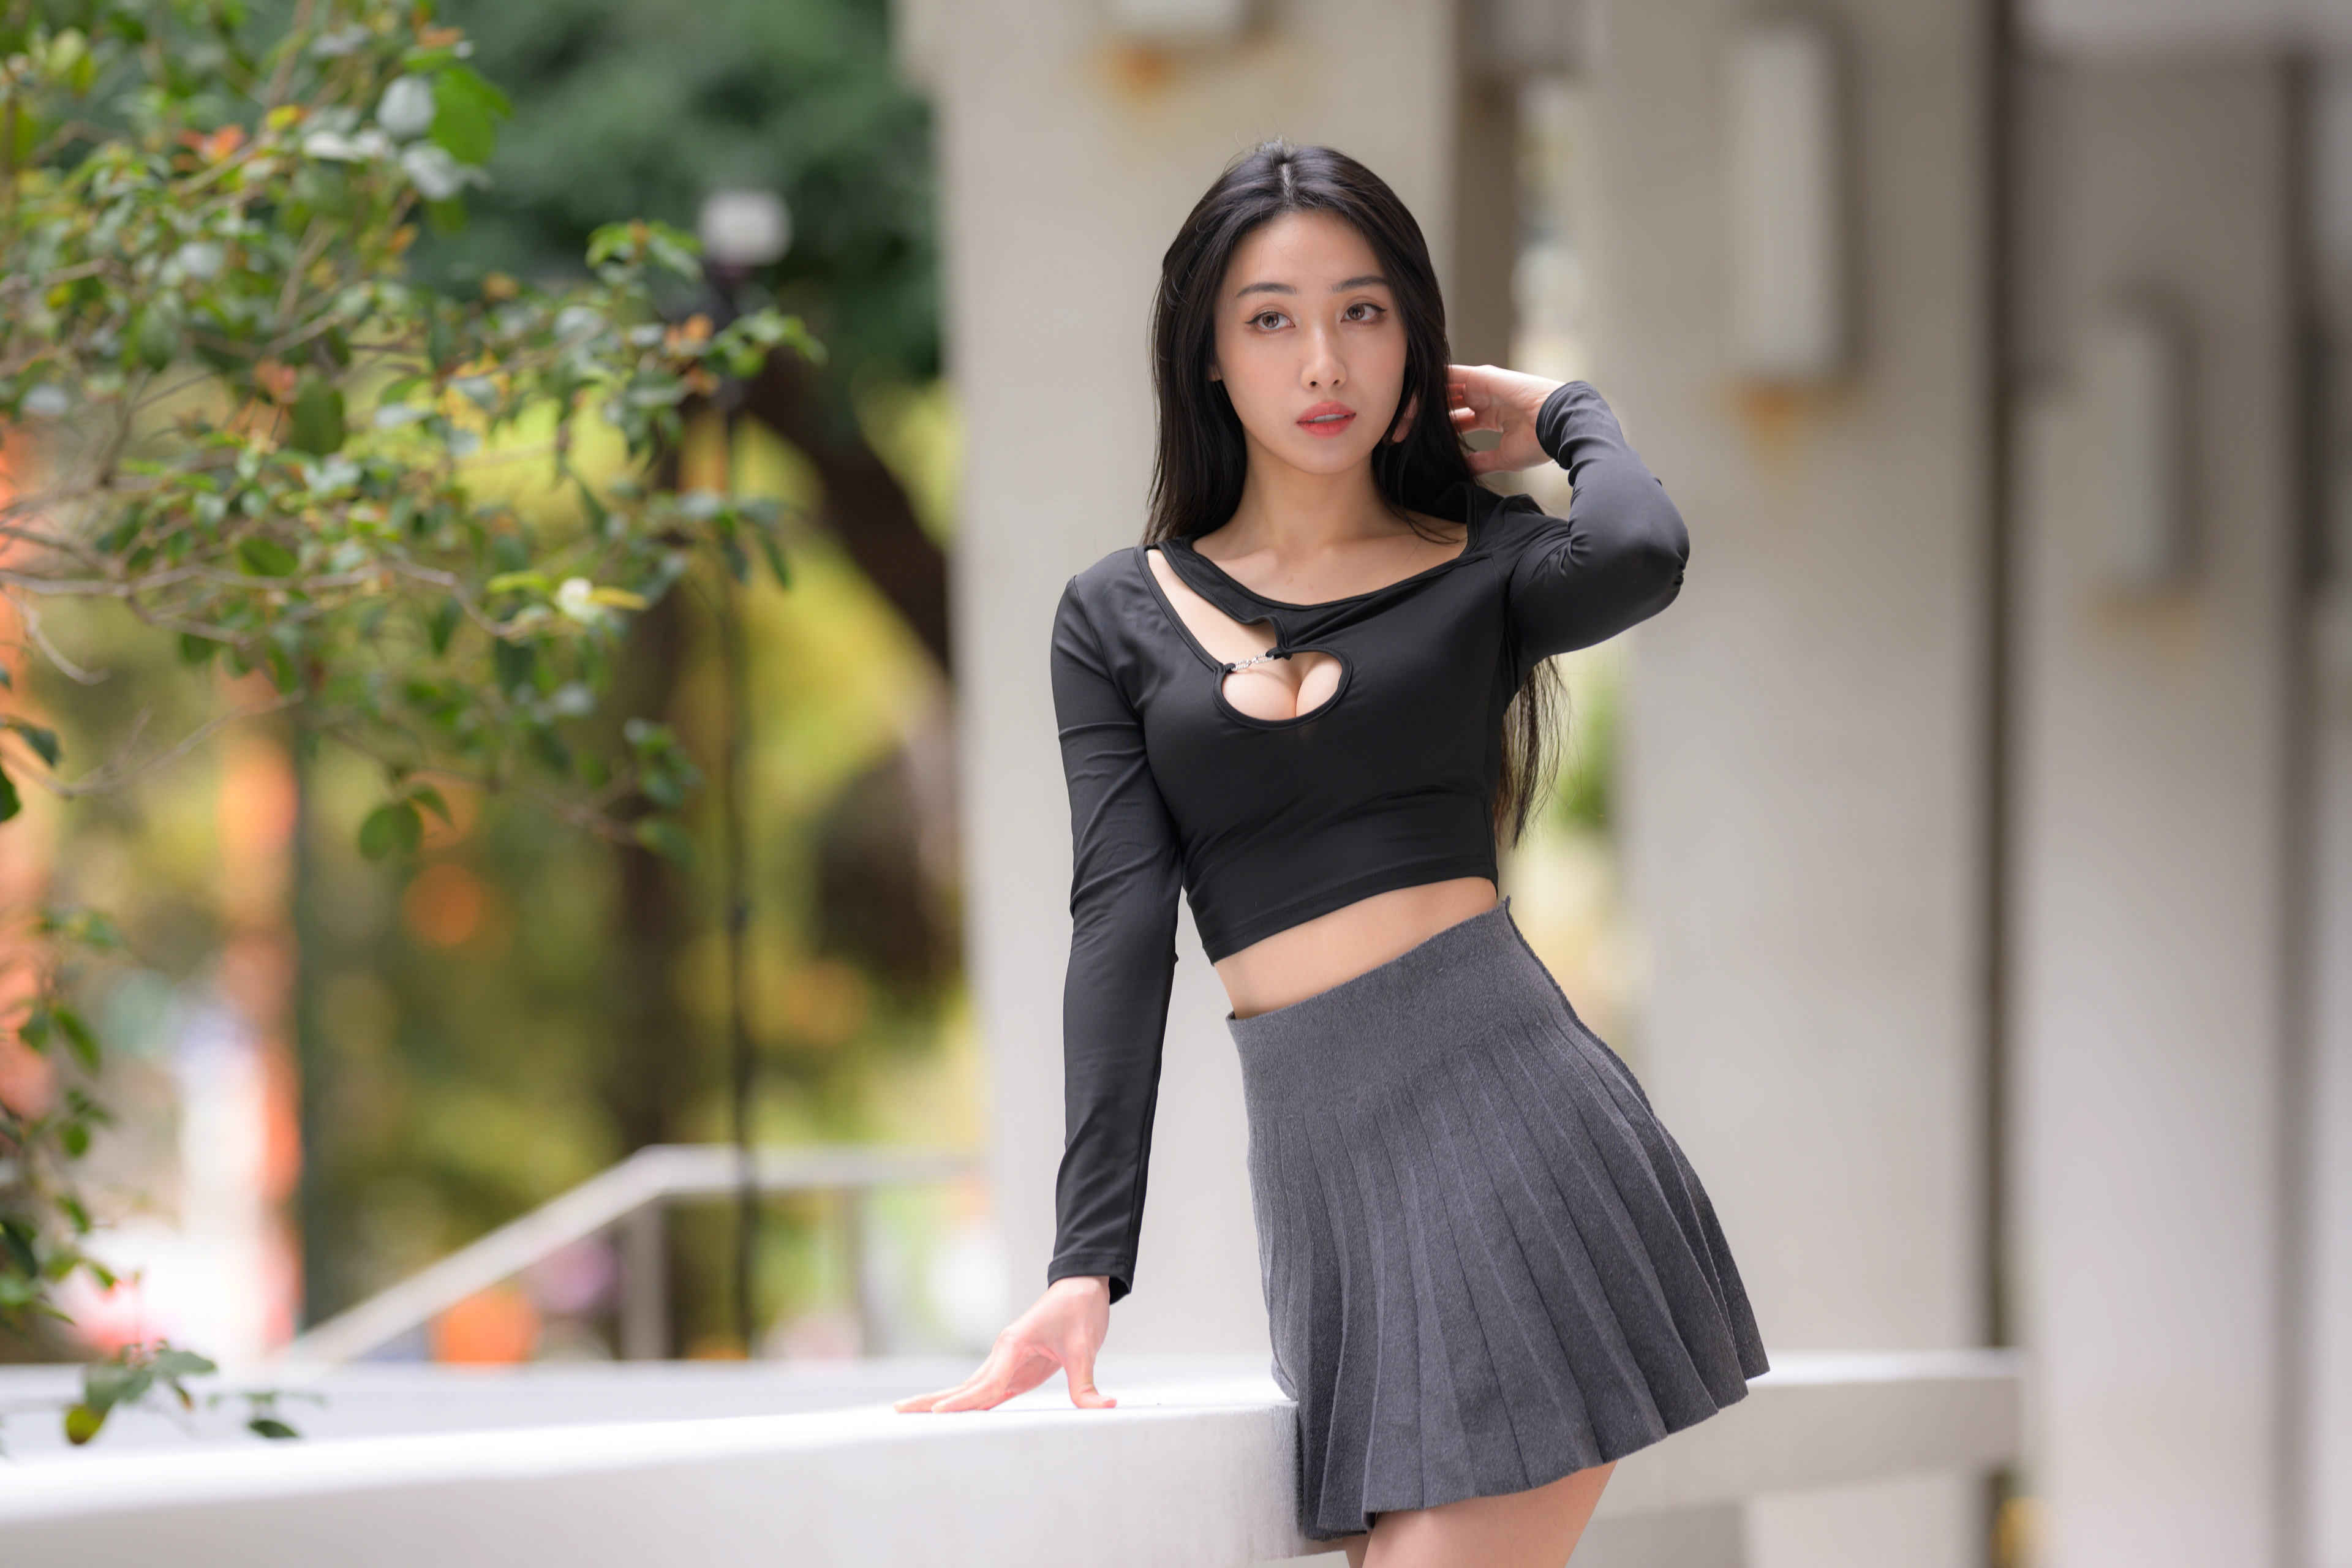 Asian Model Women Long Hair Dark Hair 3840x2560